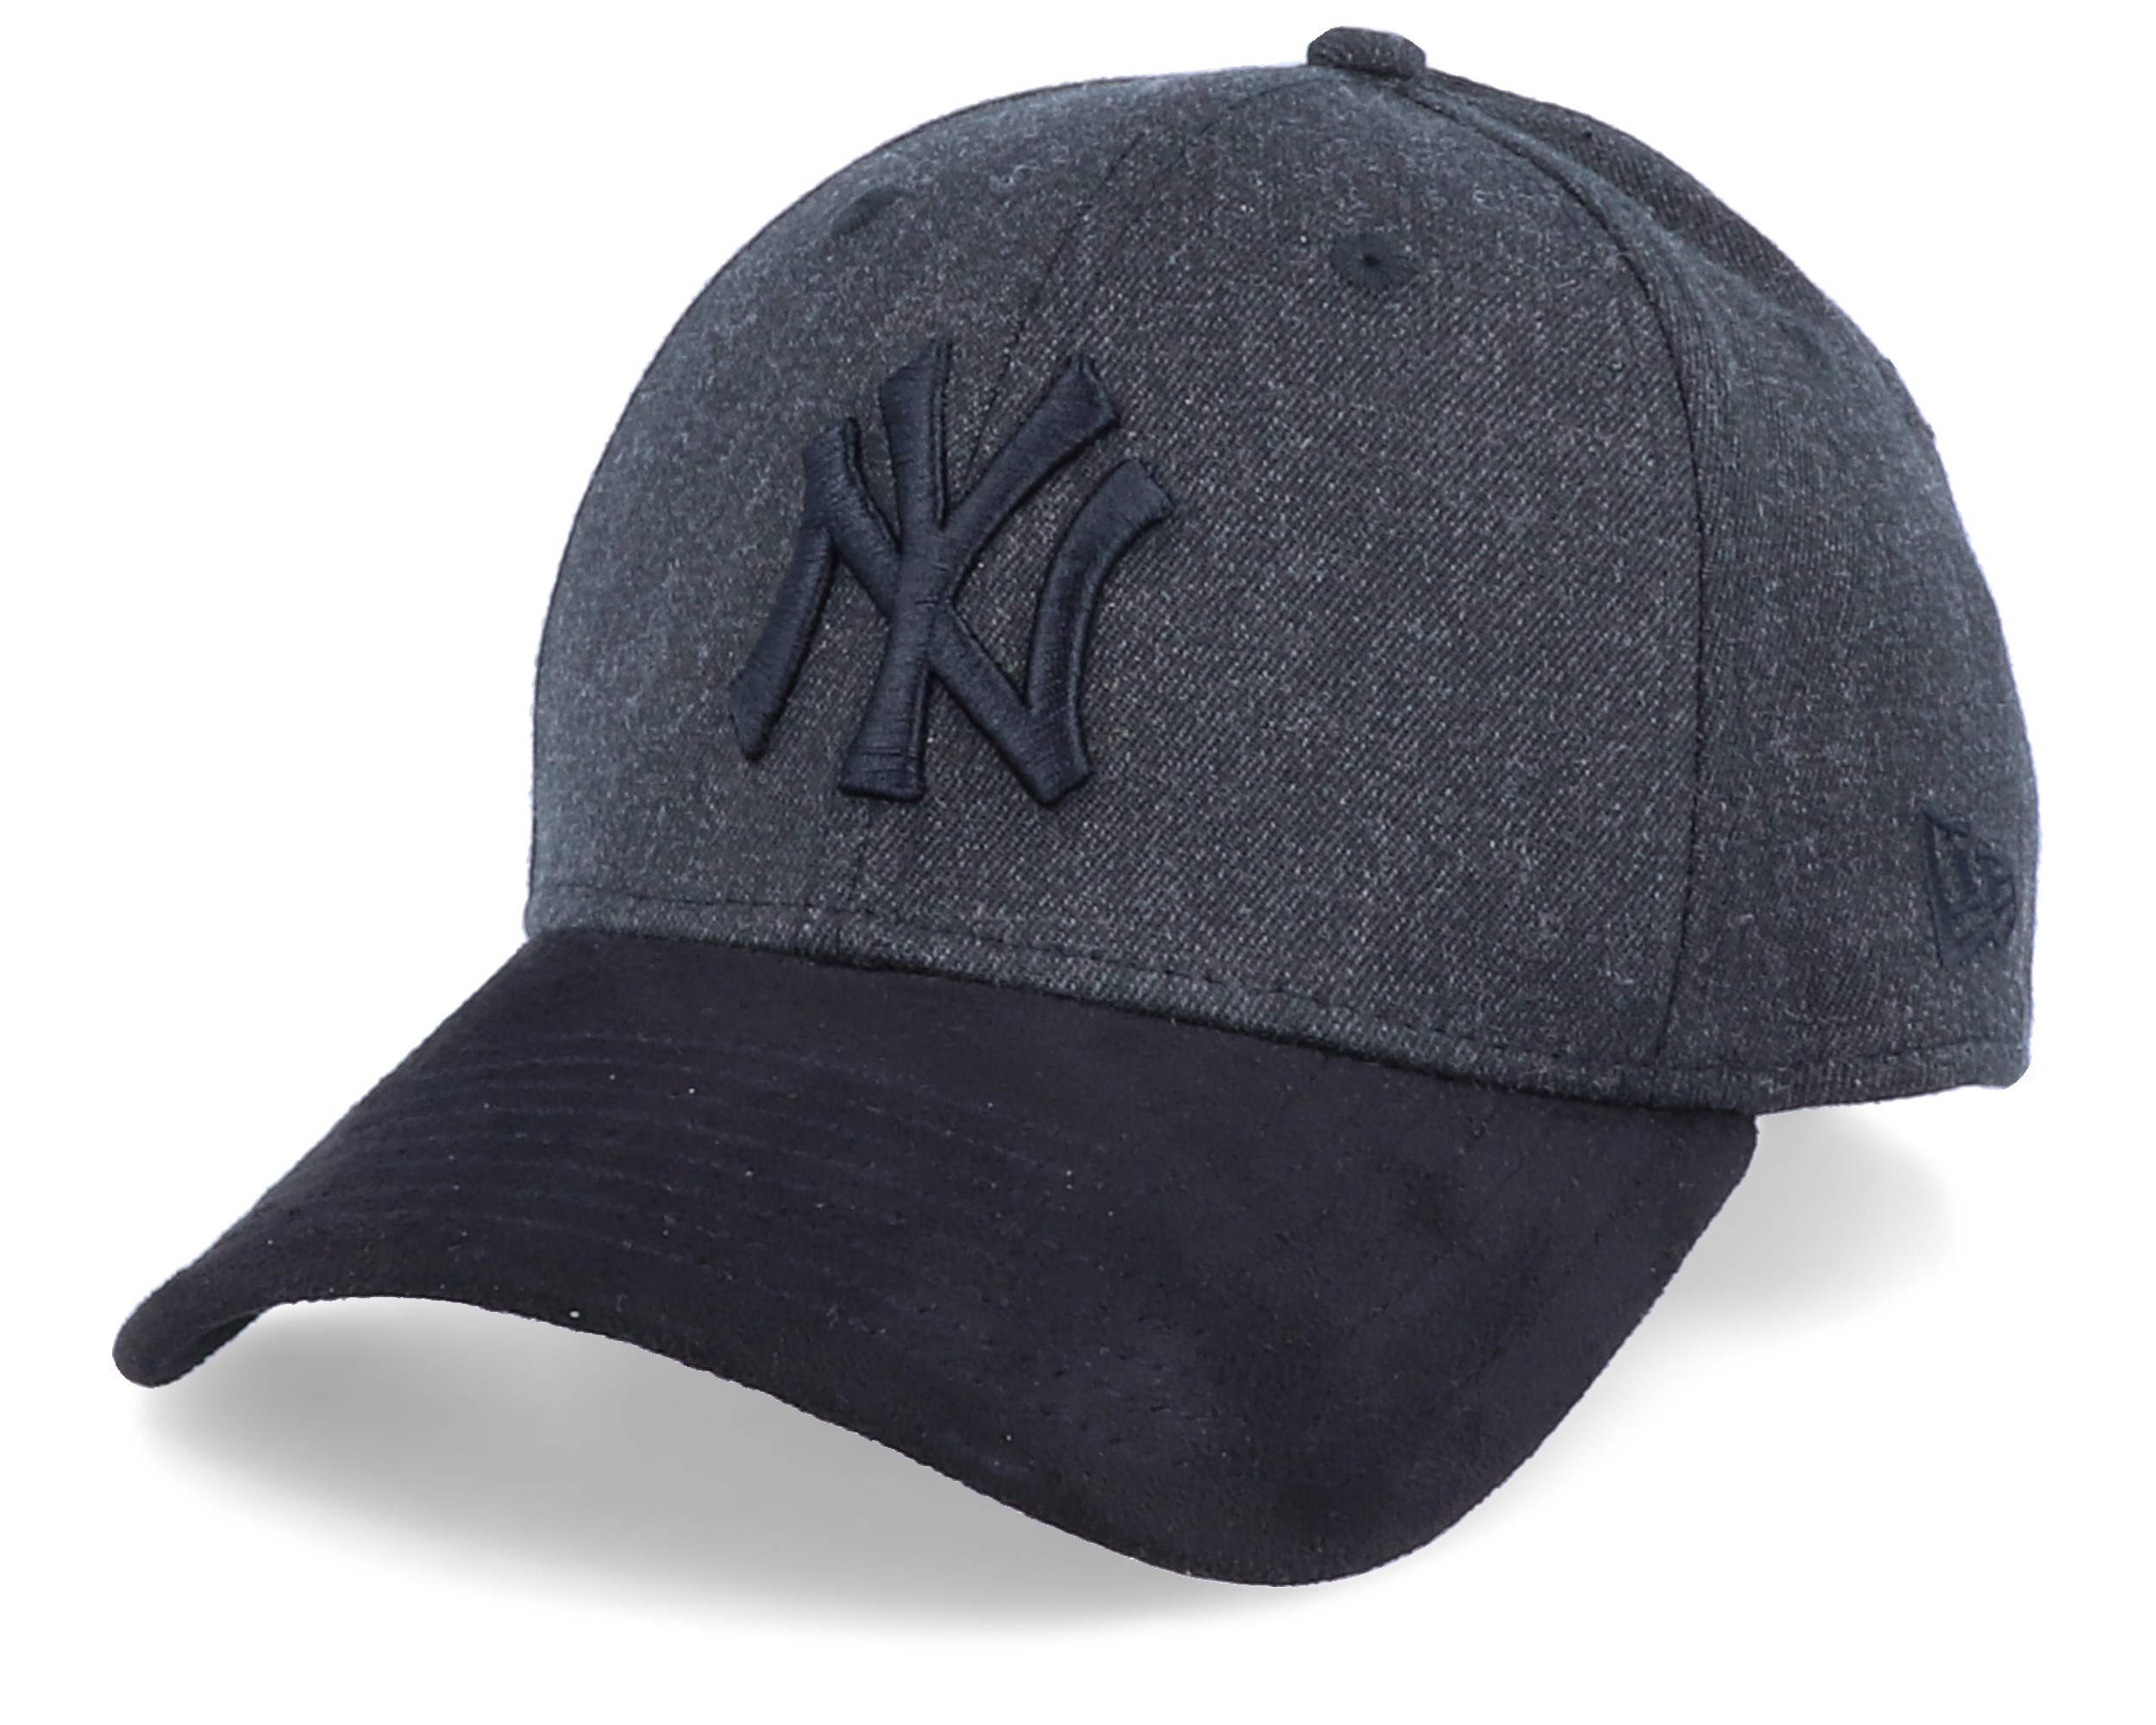 New Era 39Thirty Cap HEATHER New York Yankees schwarz 